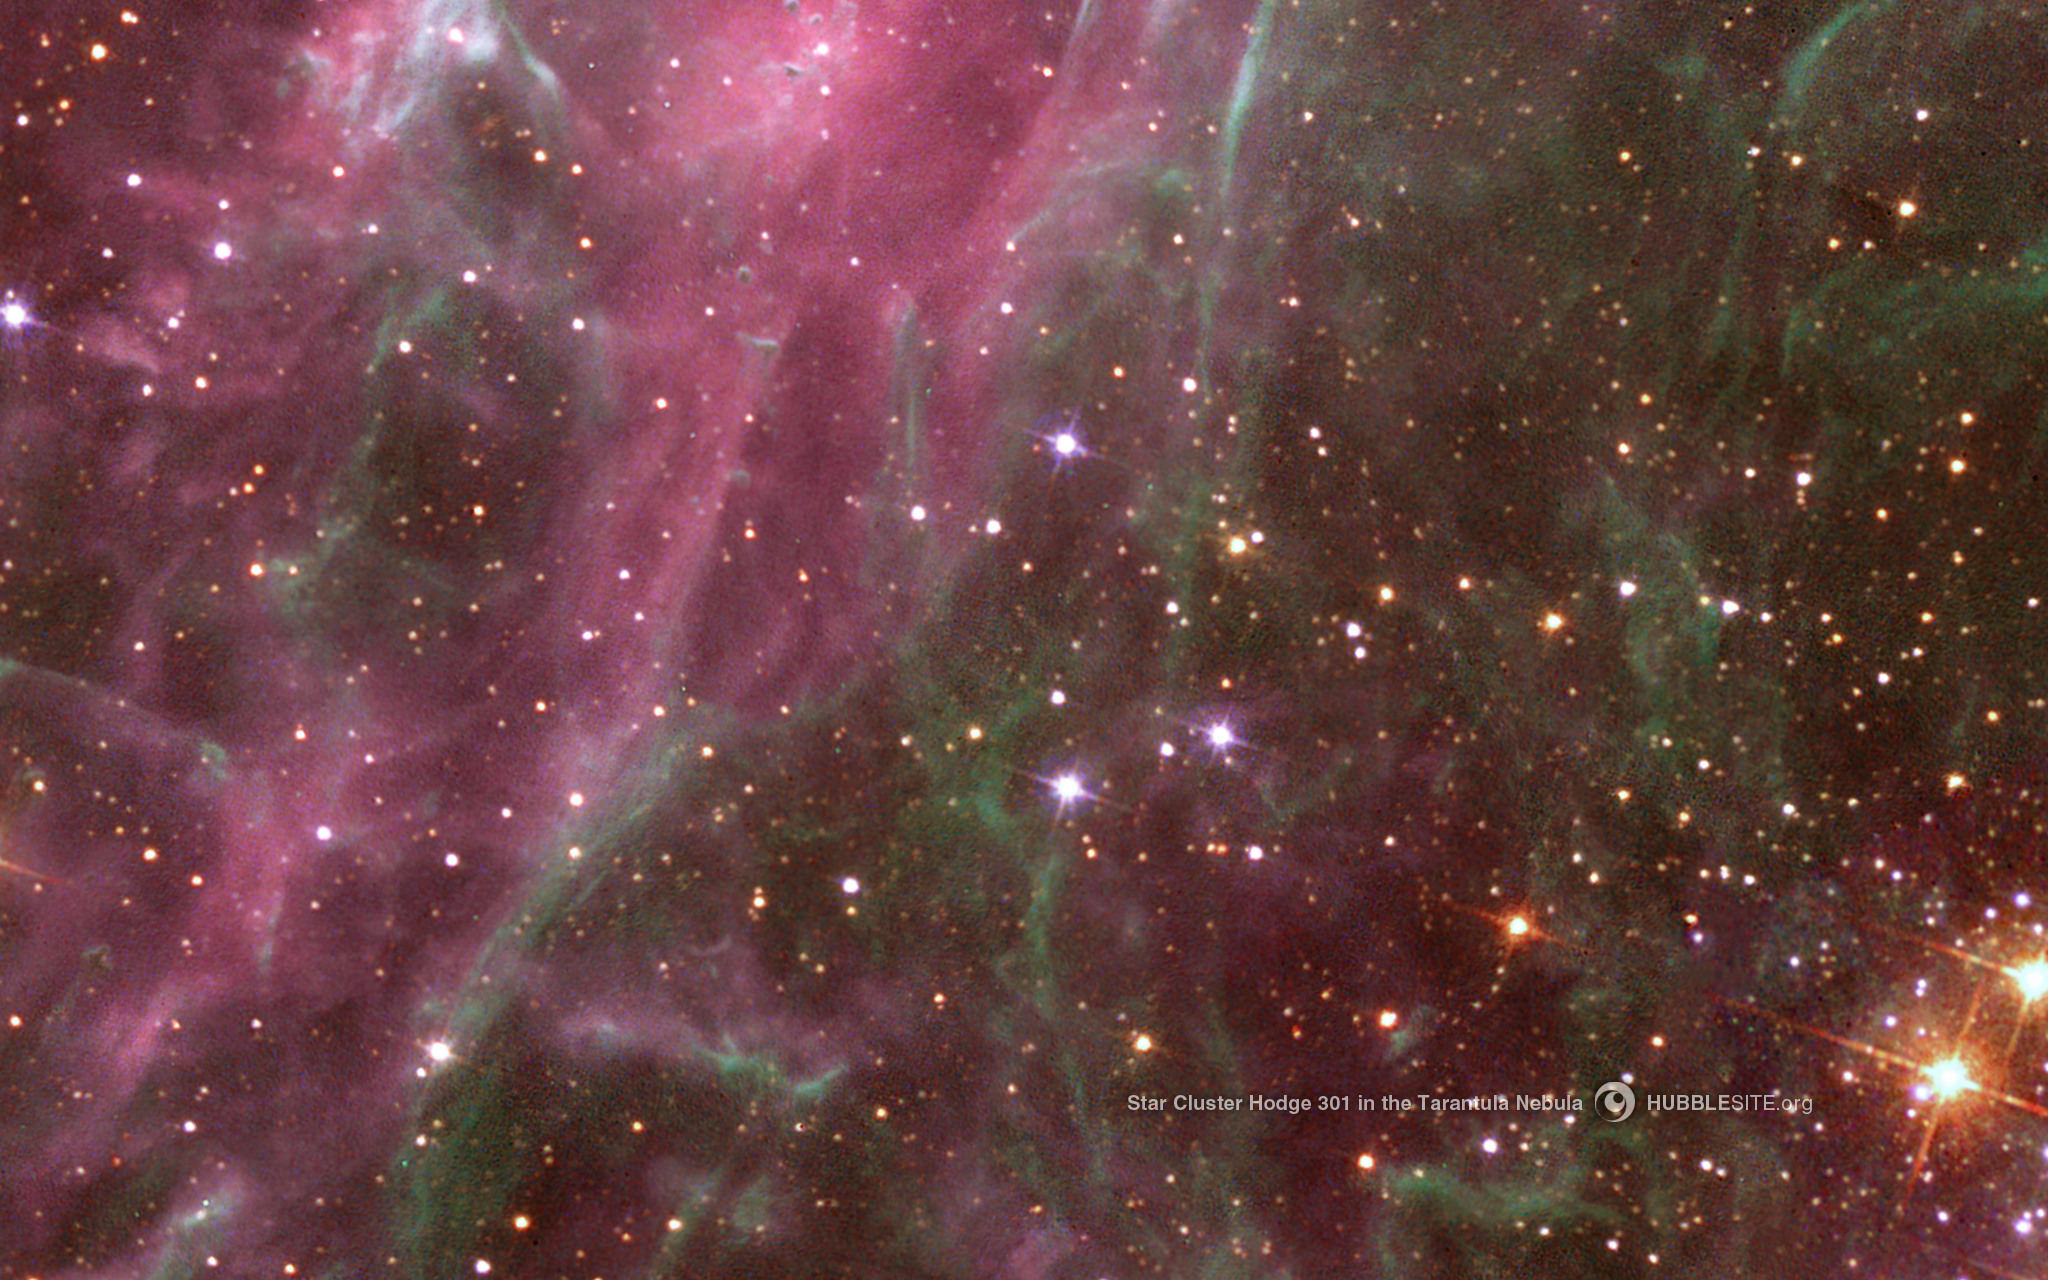 Star Cluster Hodge 301 in the Tarantula Nebula